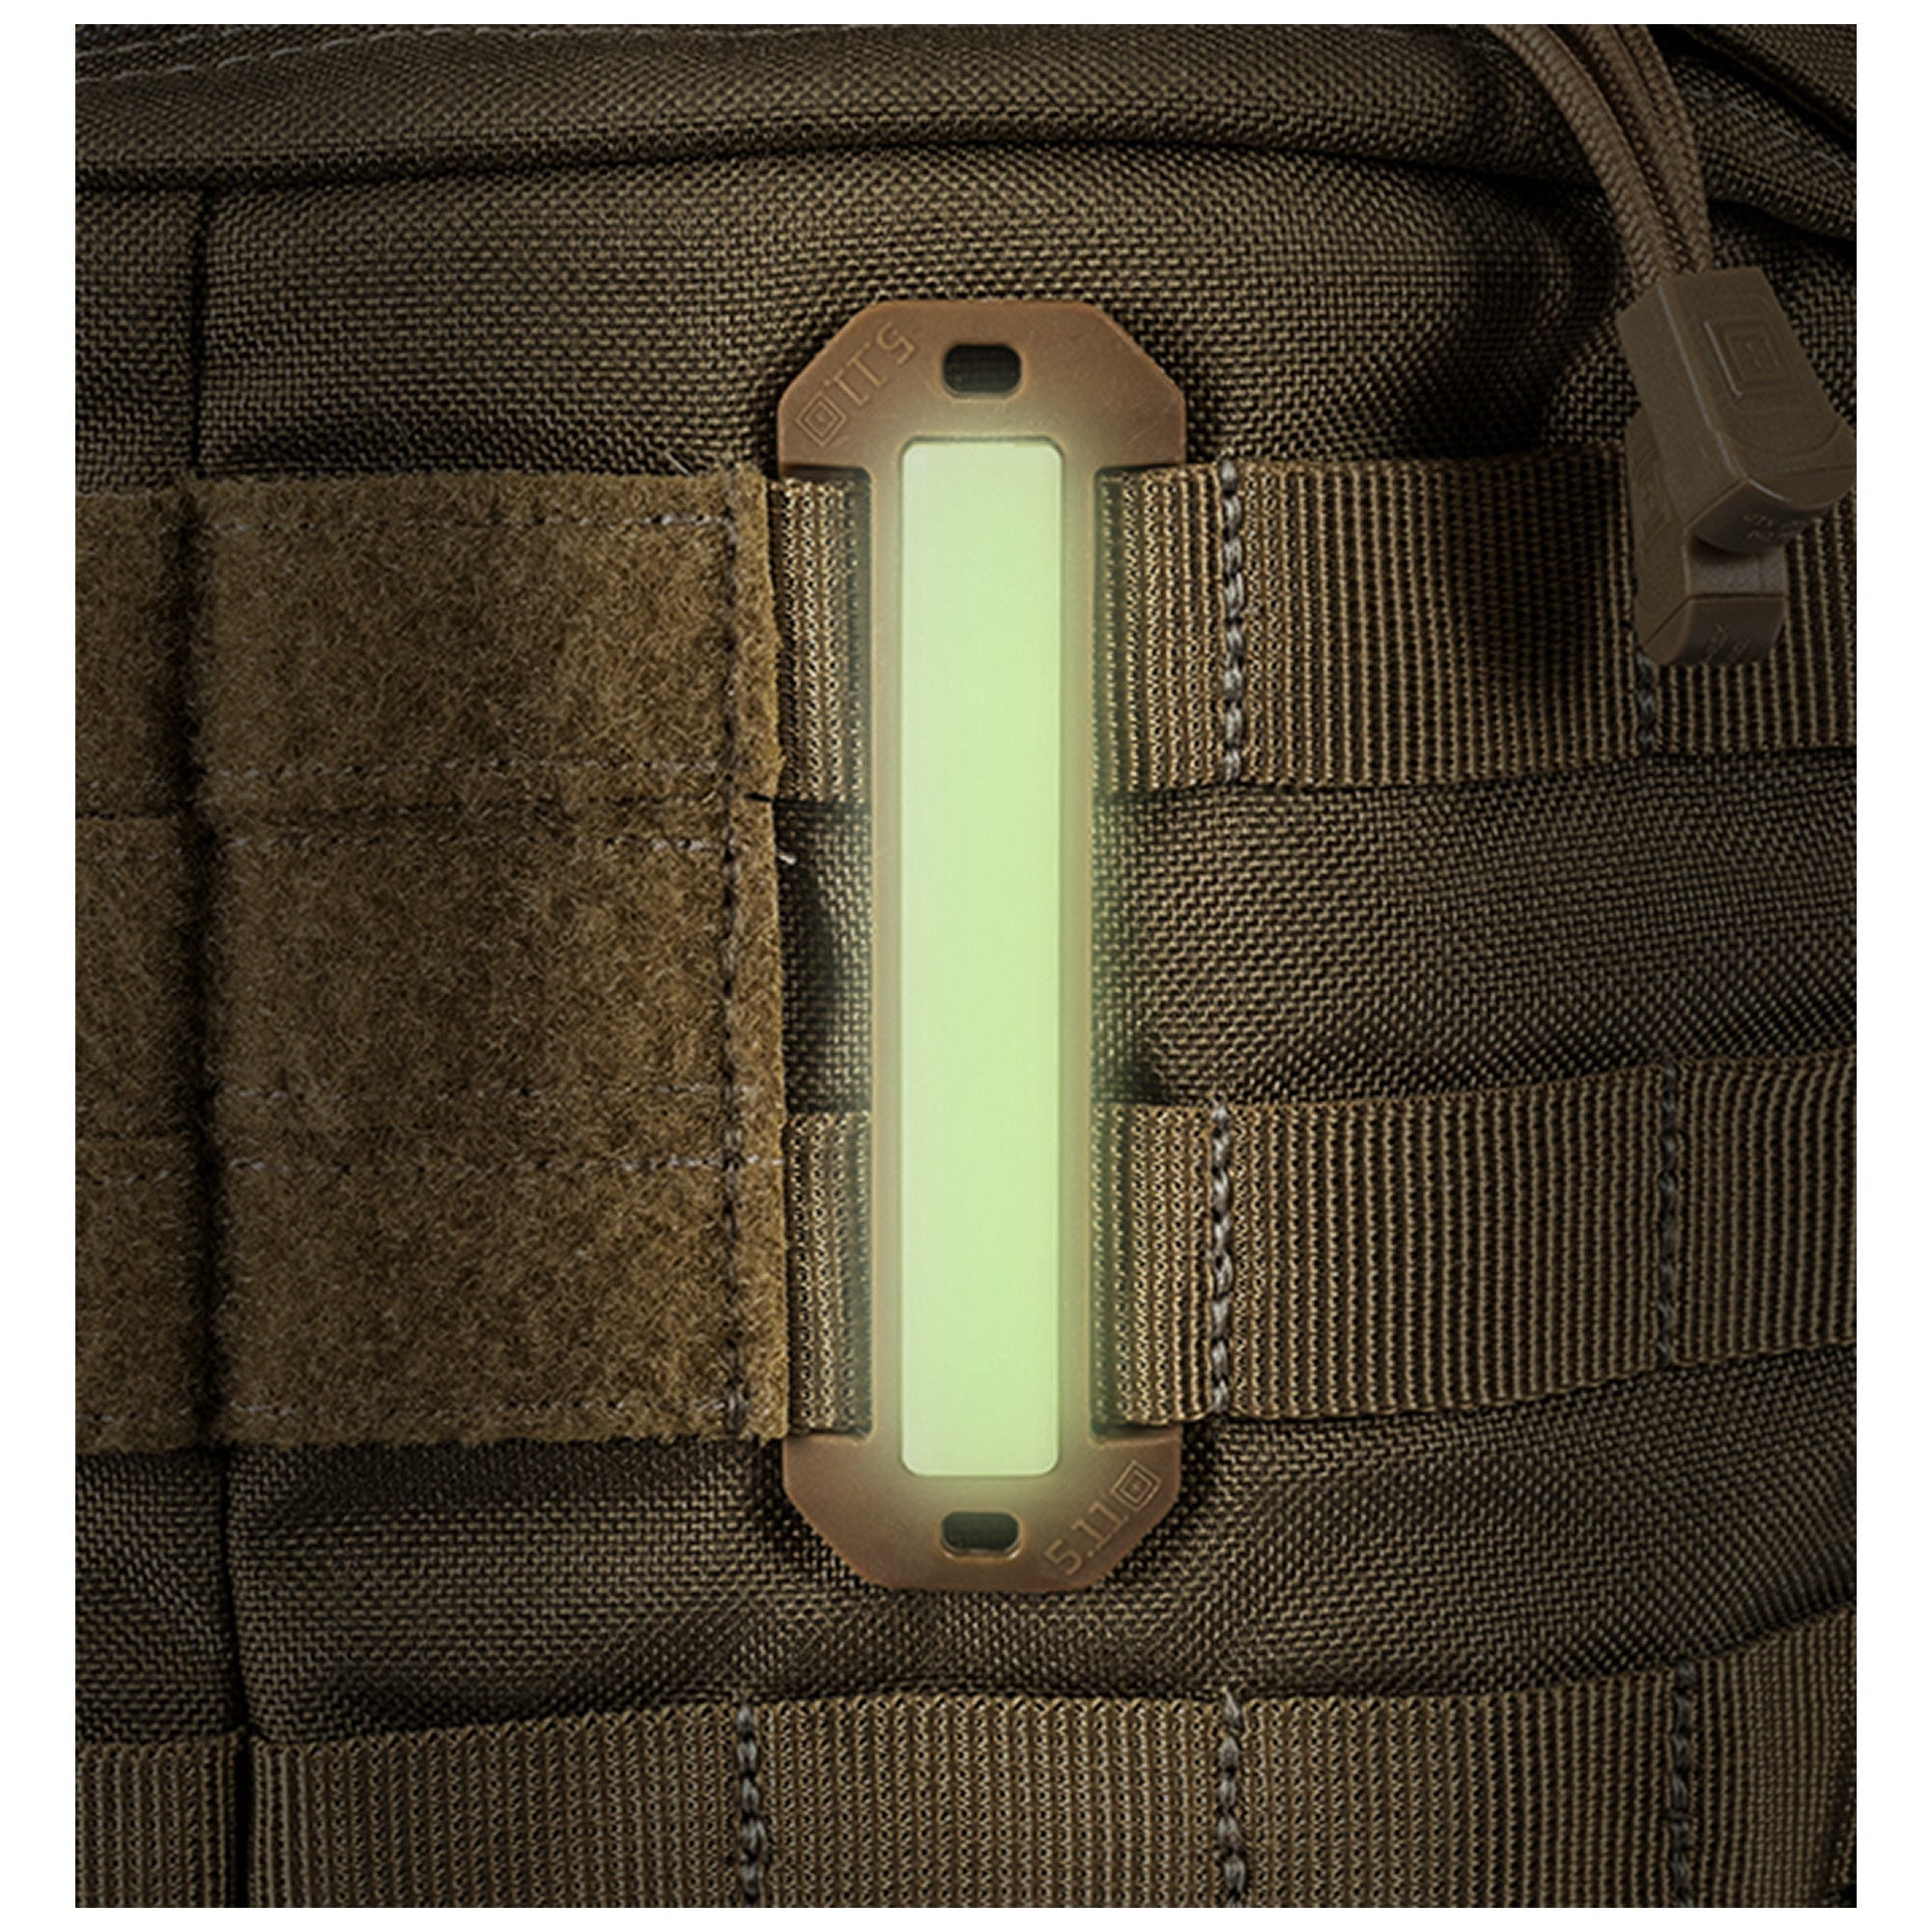 5.11 Tactical Light Marker 2 Tactical Gear Australia Supplier Distributor Dealer